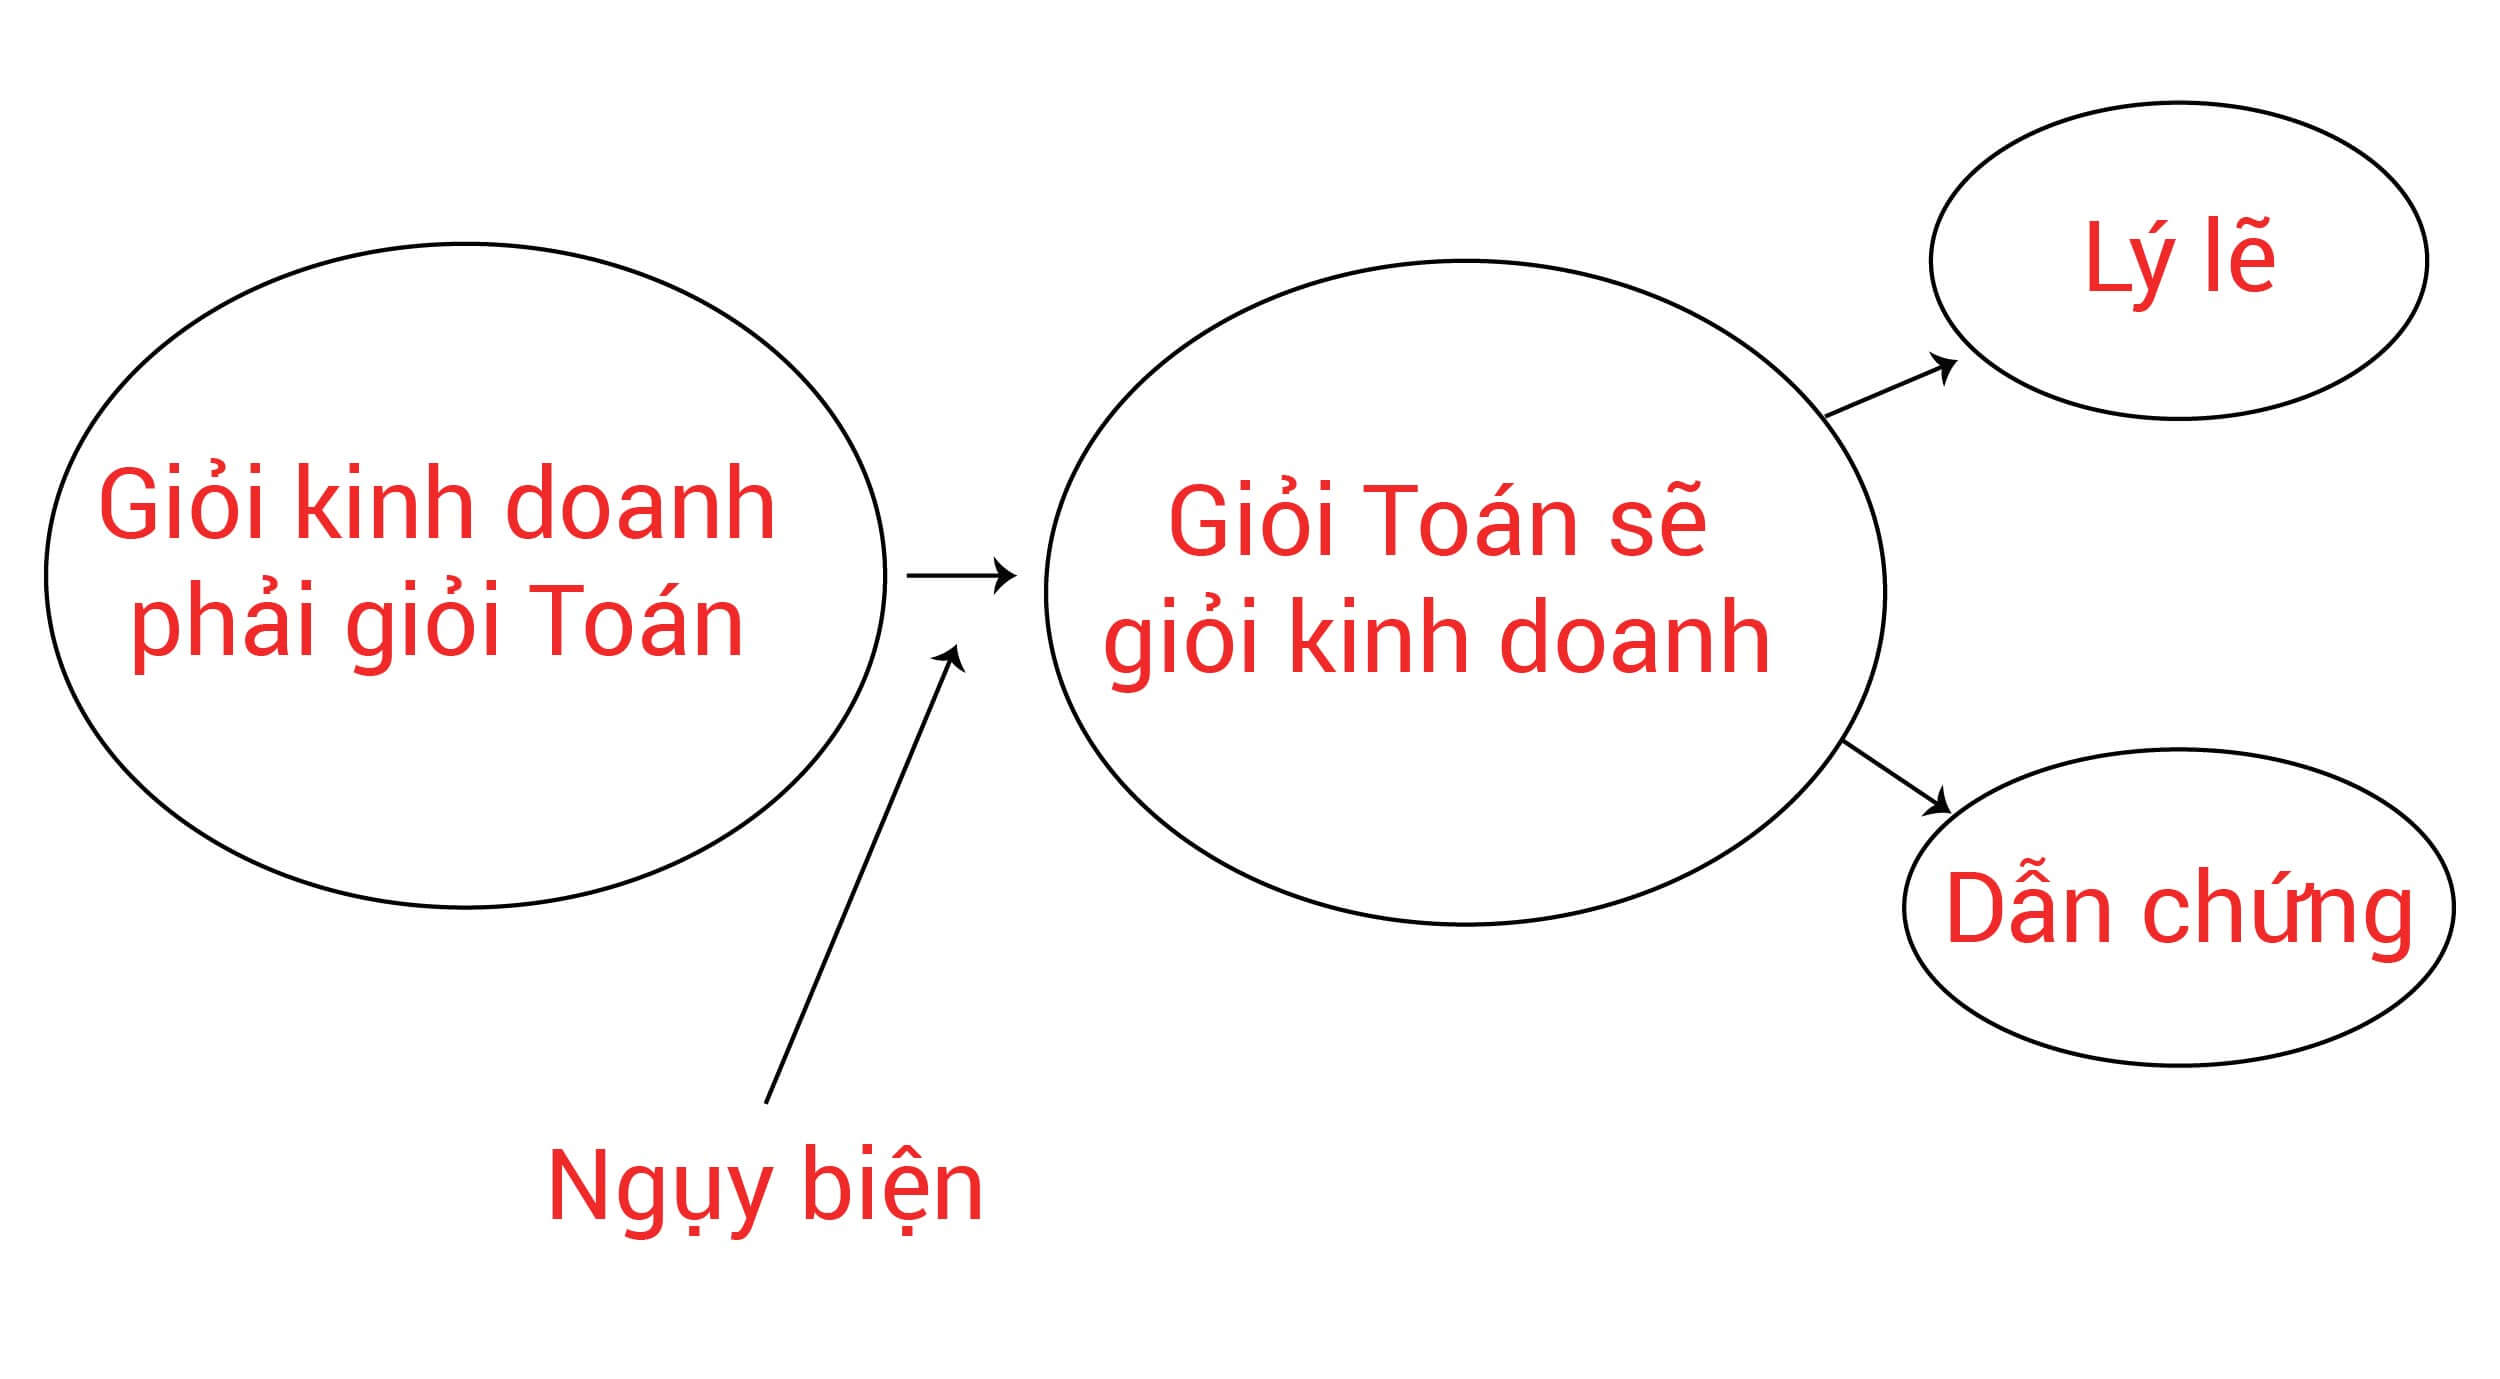 nhung-loi-nguy-bien-trong-ielts-writing-task-2-va-cach-khac-phuc-phan-1-nguy-bien-nguoi-rom-phan-tich